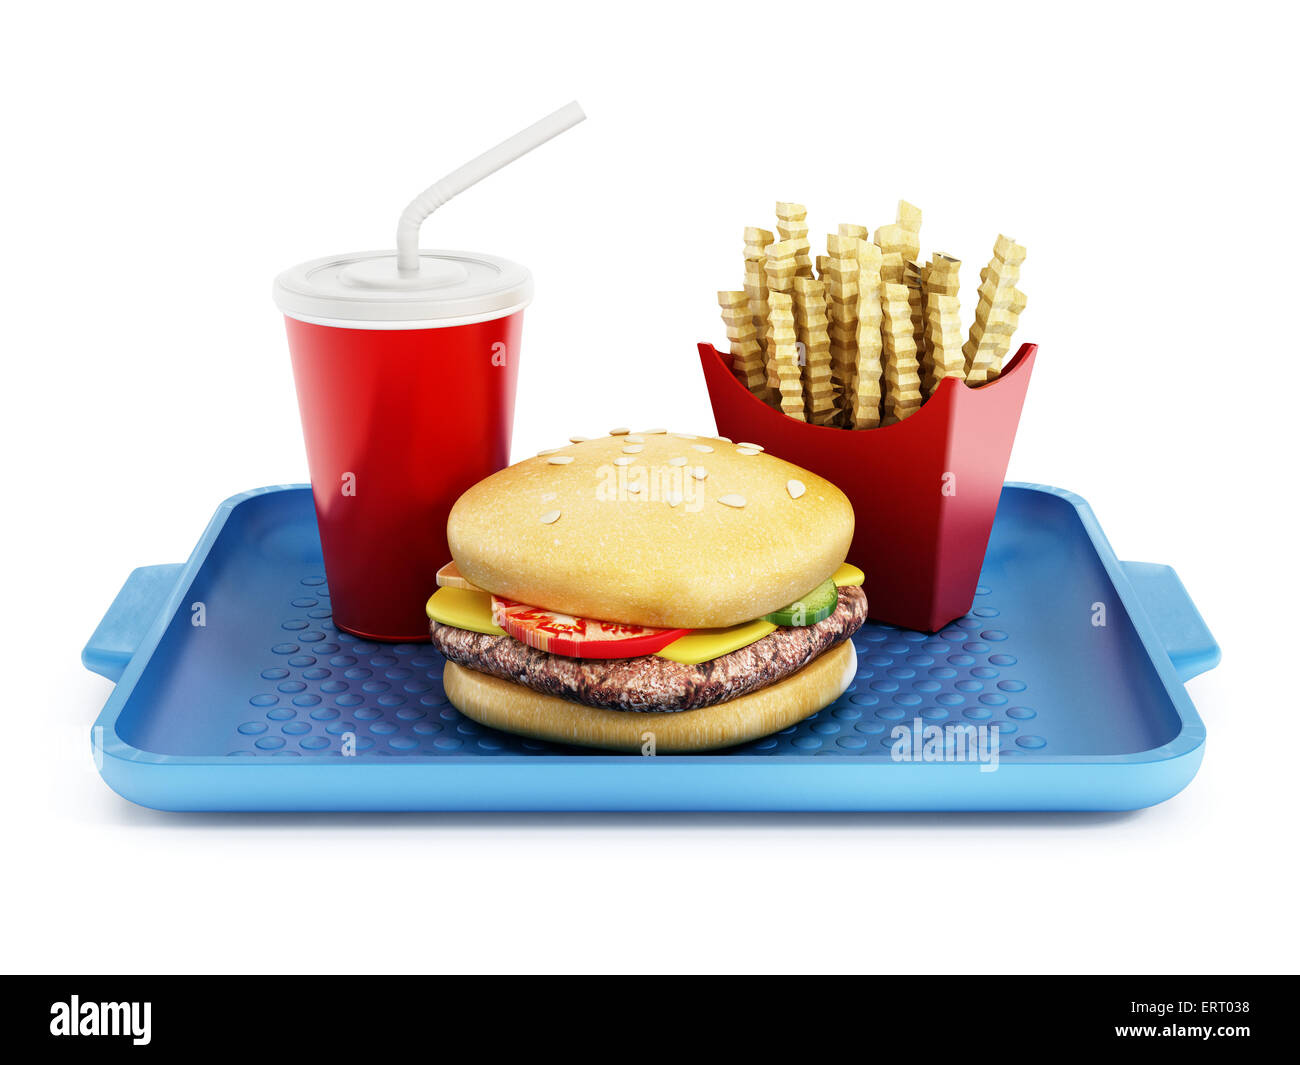 Hamburger, soda and french fries on fast food tray Stock Photo - Alamy